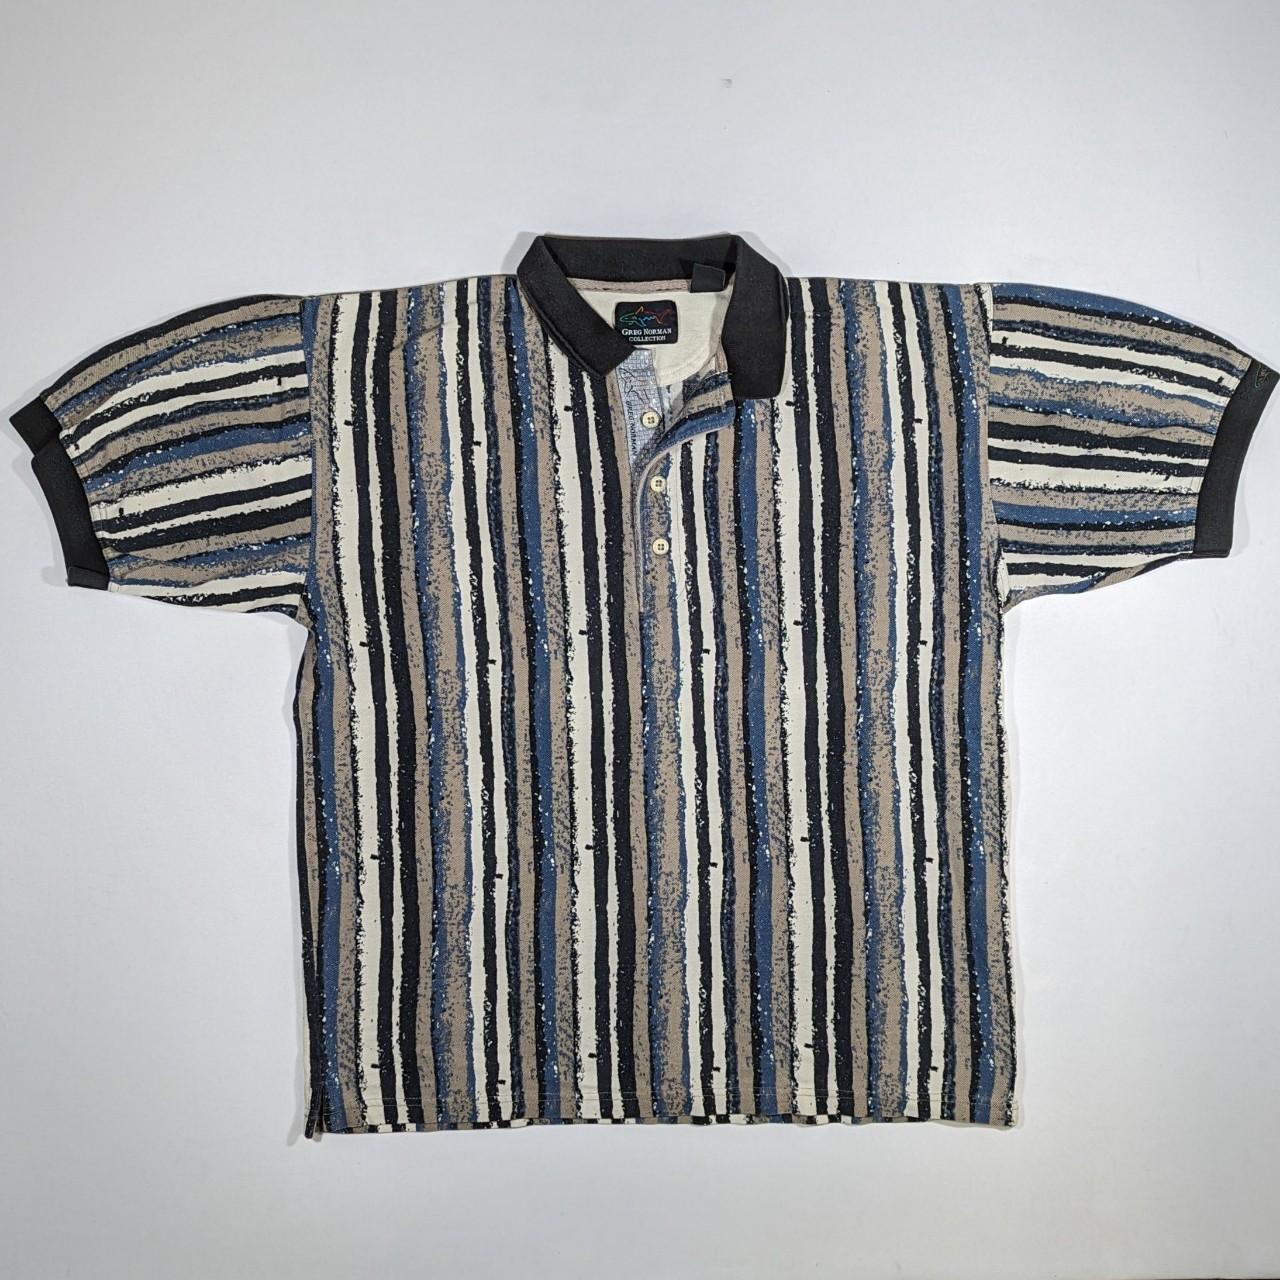 Greg Norman Collection, Shirts